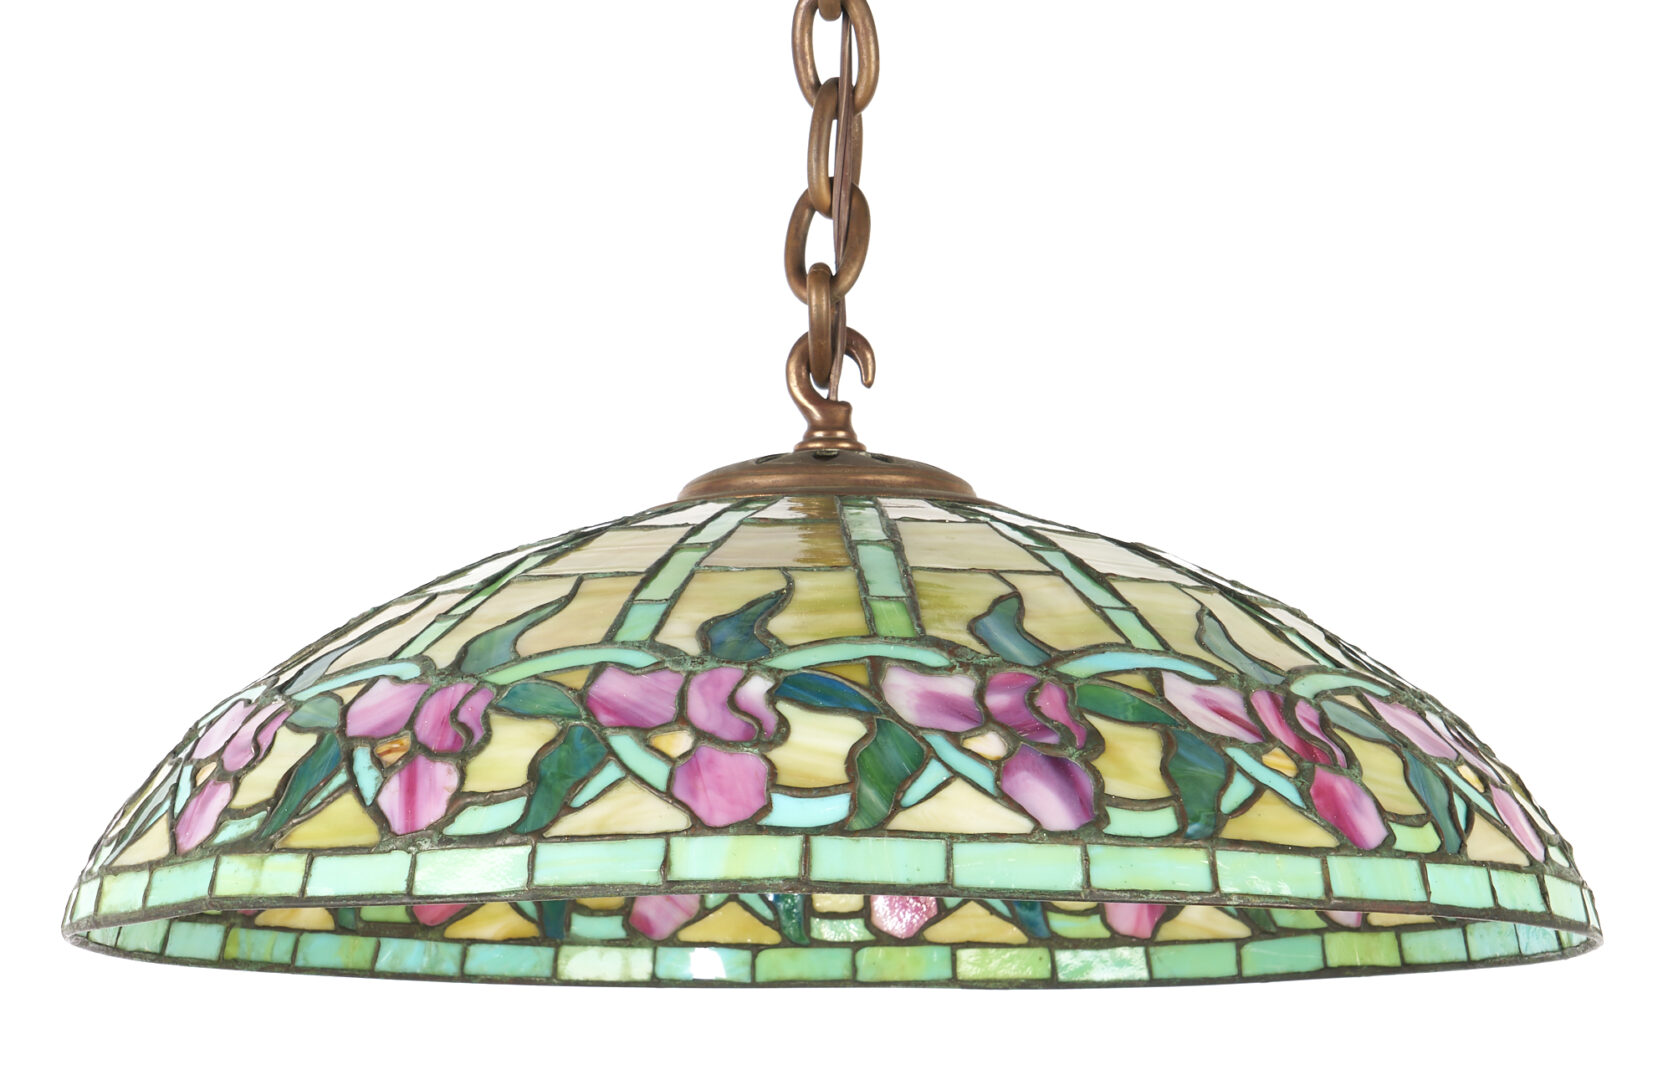 Lot 408: Duffner & Kimberly Leaded Glass Hanging Lamp, Irises